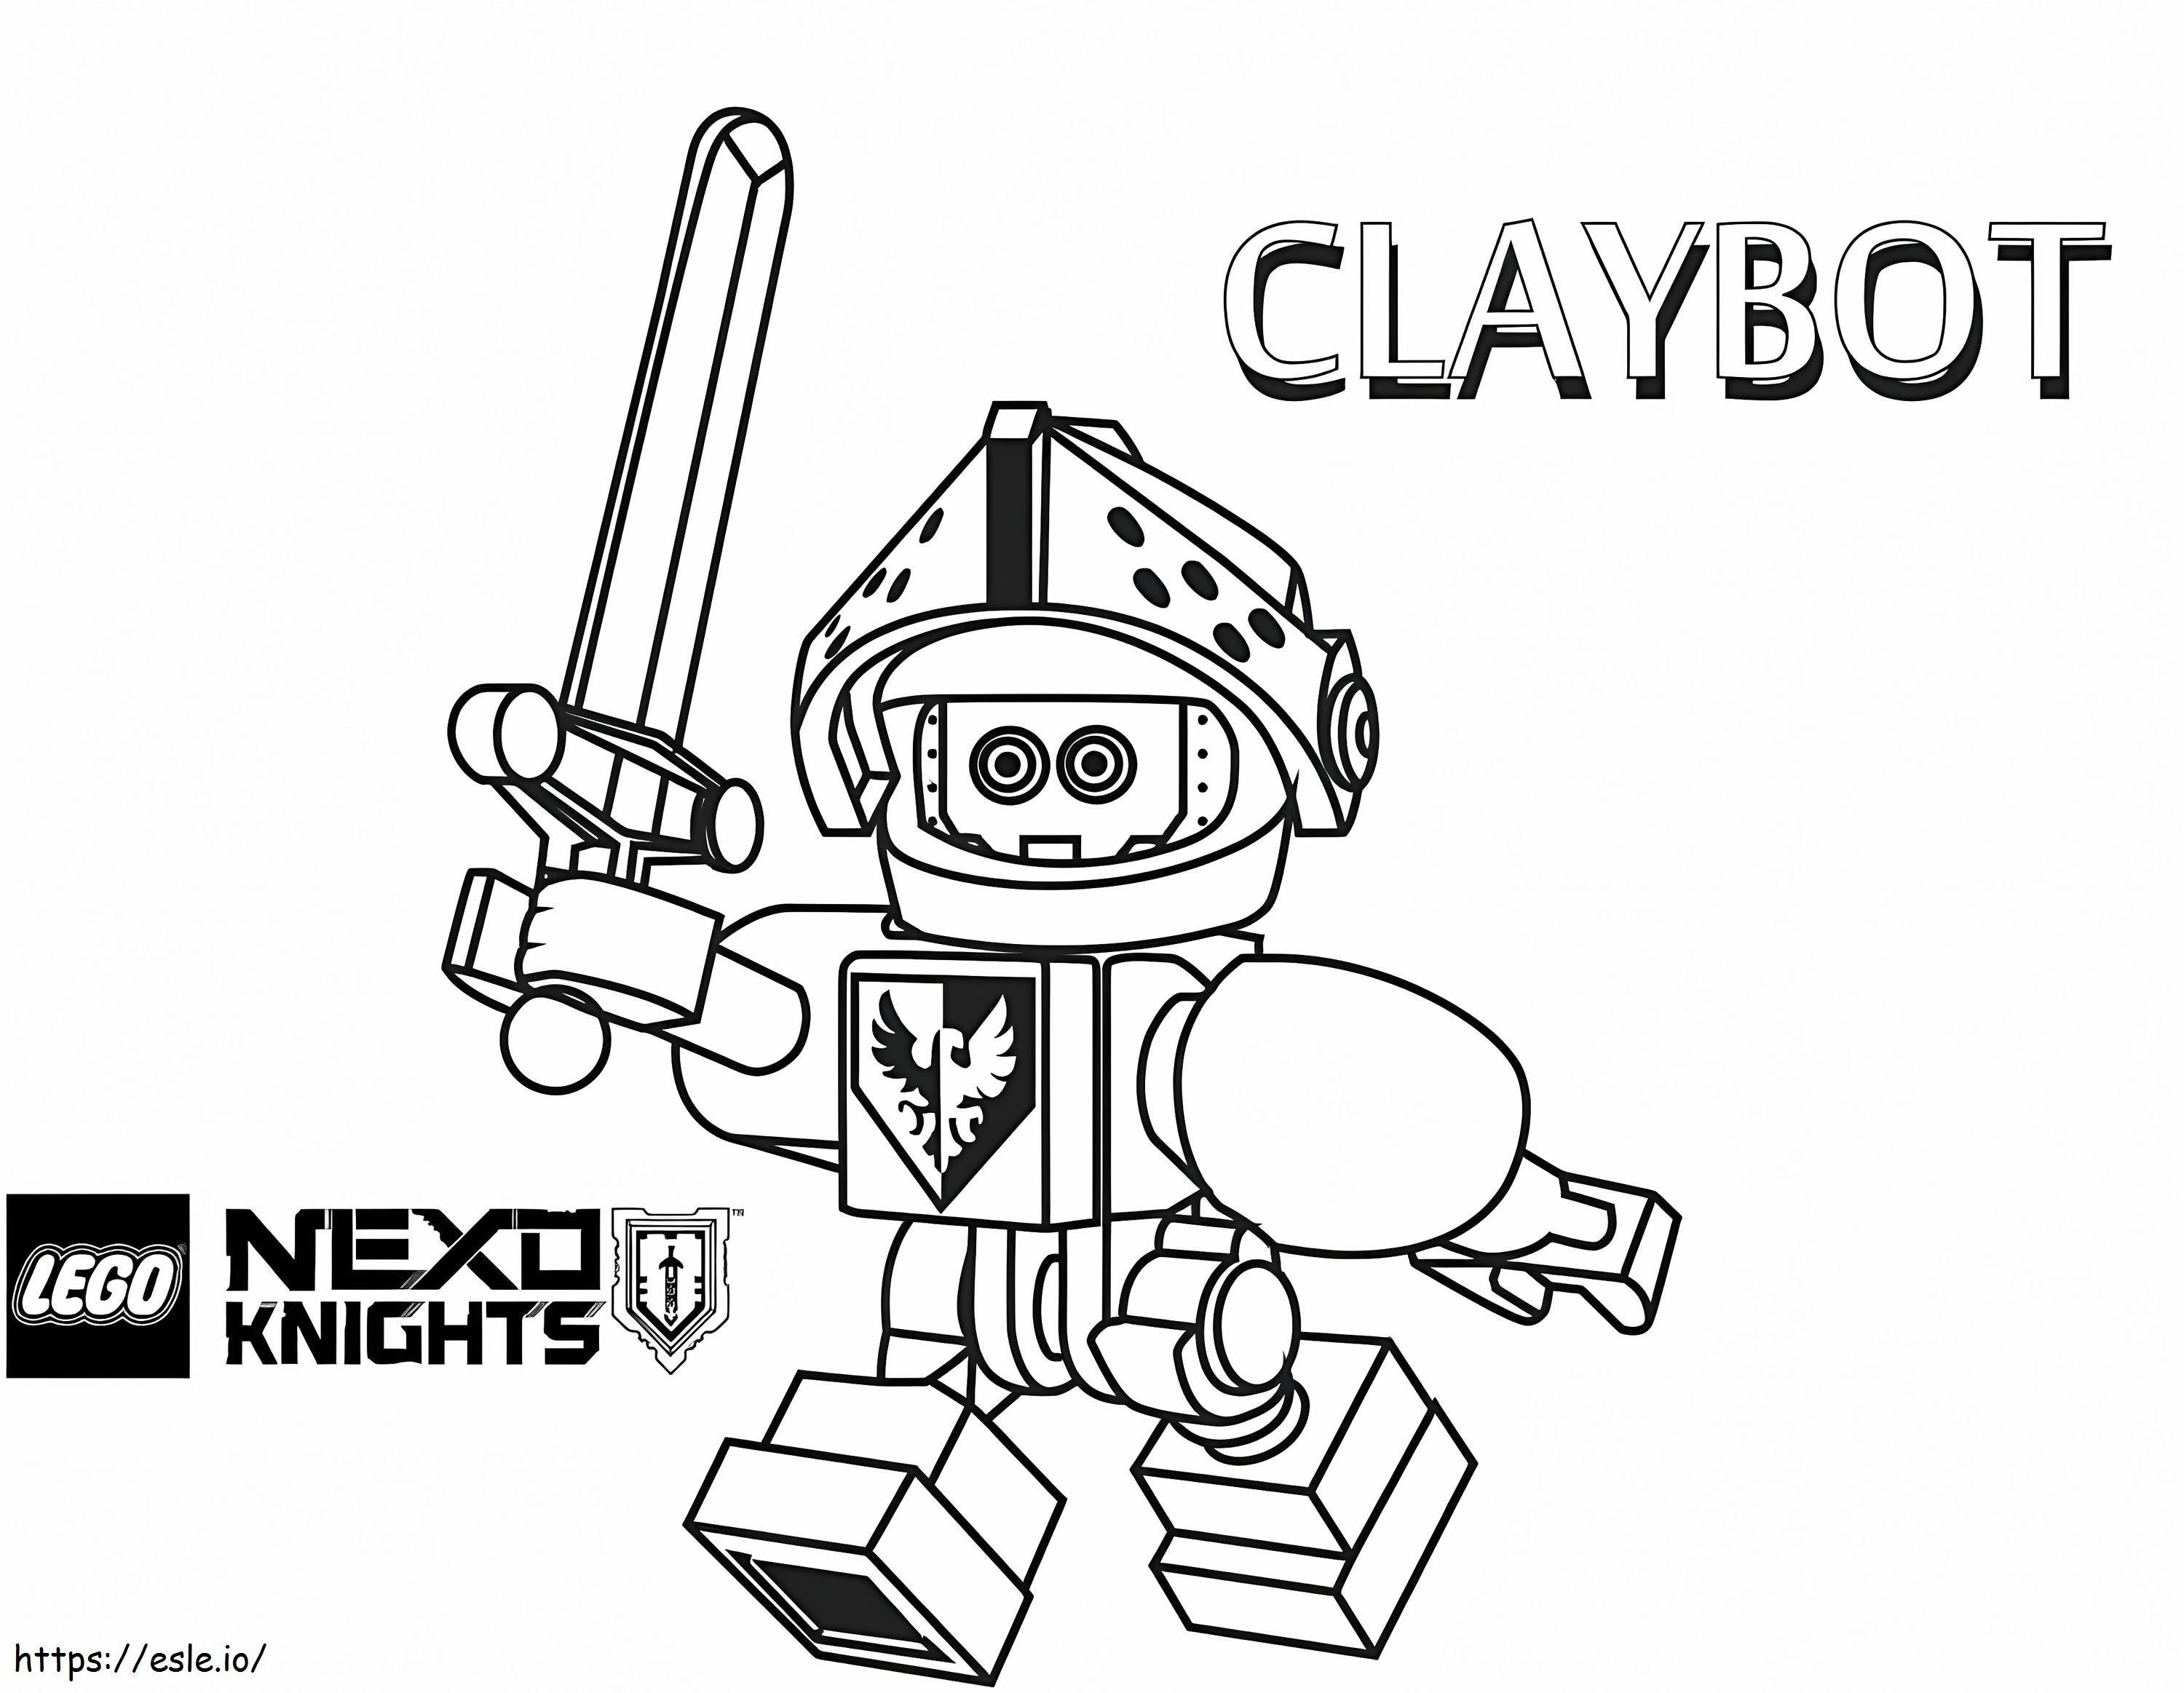 Claybo van Nexo Knights kleurplaat kleurplaat